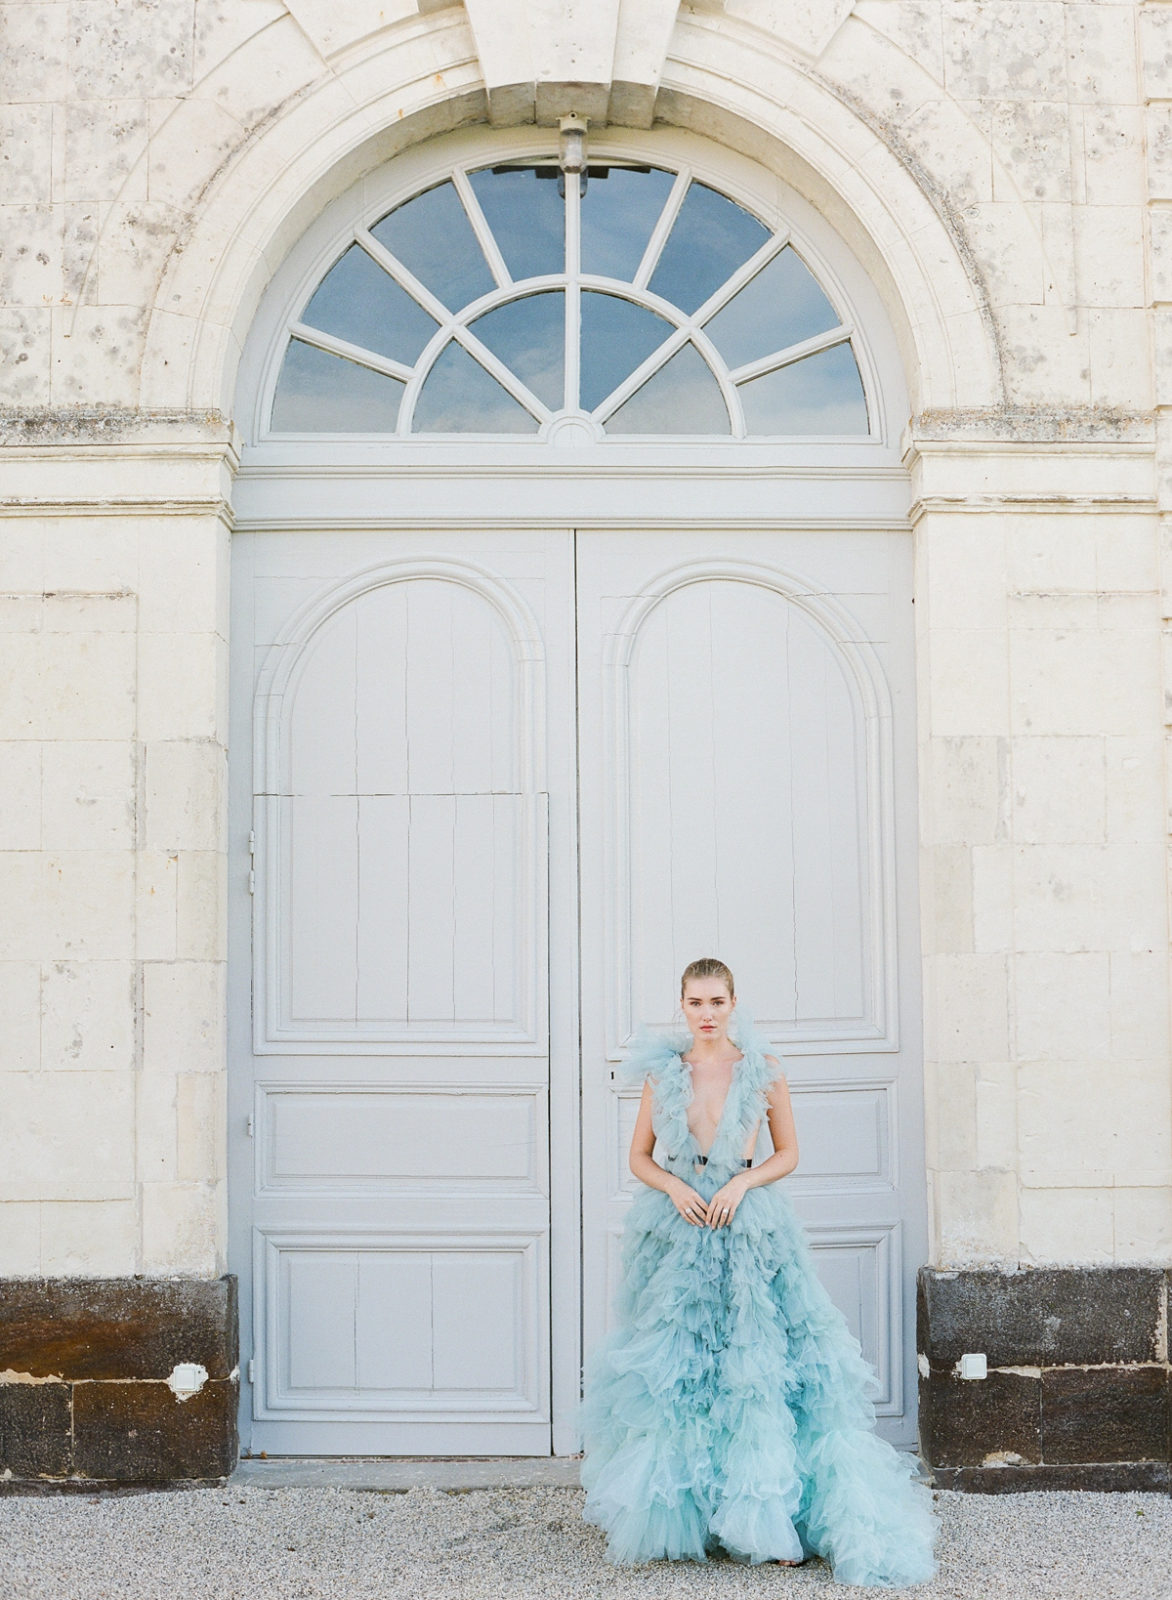 Chateau Grand Luce Wedding Photographer | Molly Carr Photography | France Luxury Destination Wedding | Paris Film Photographer | Rachael Ellen Events | Colored Wedding Dress